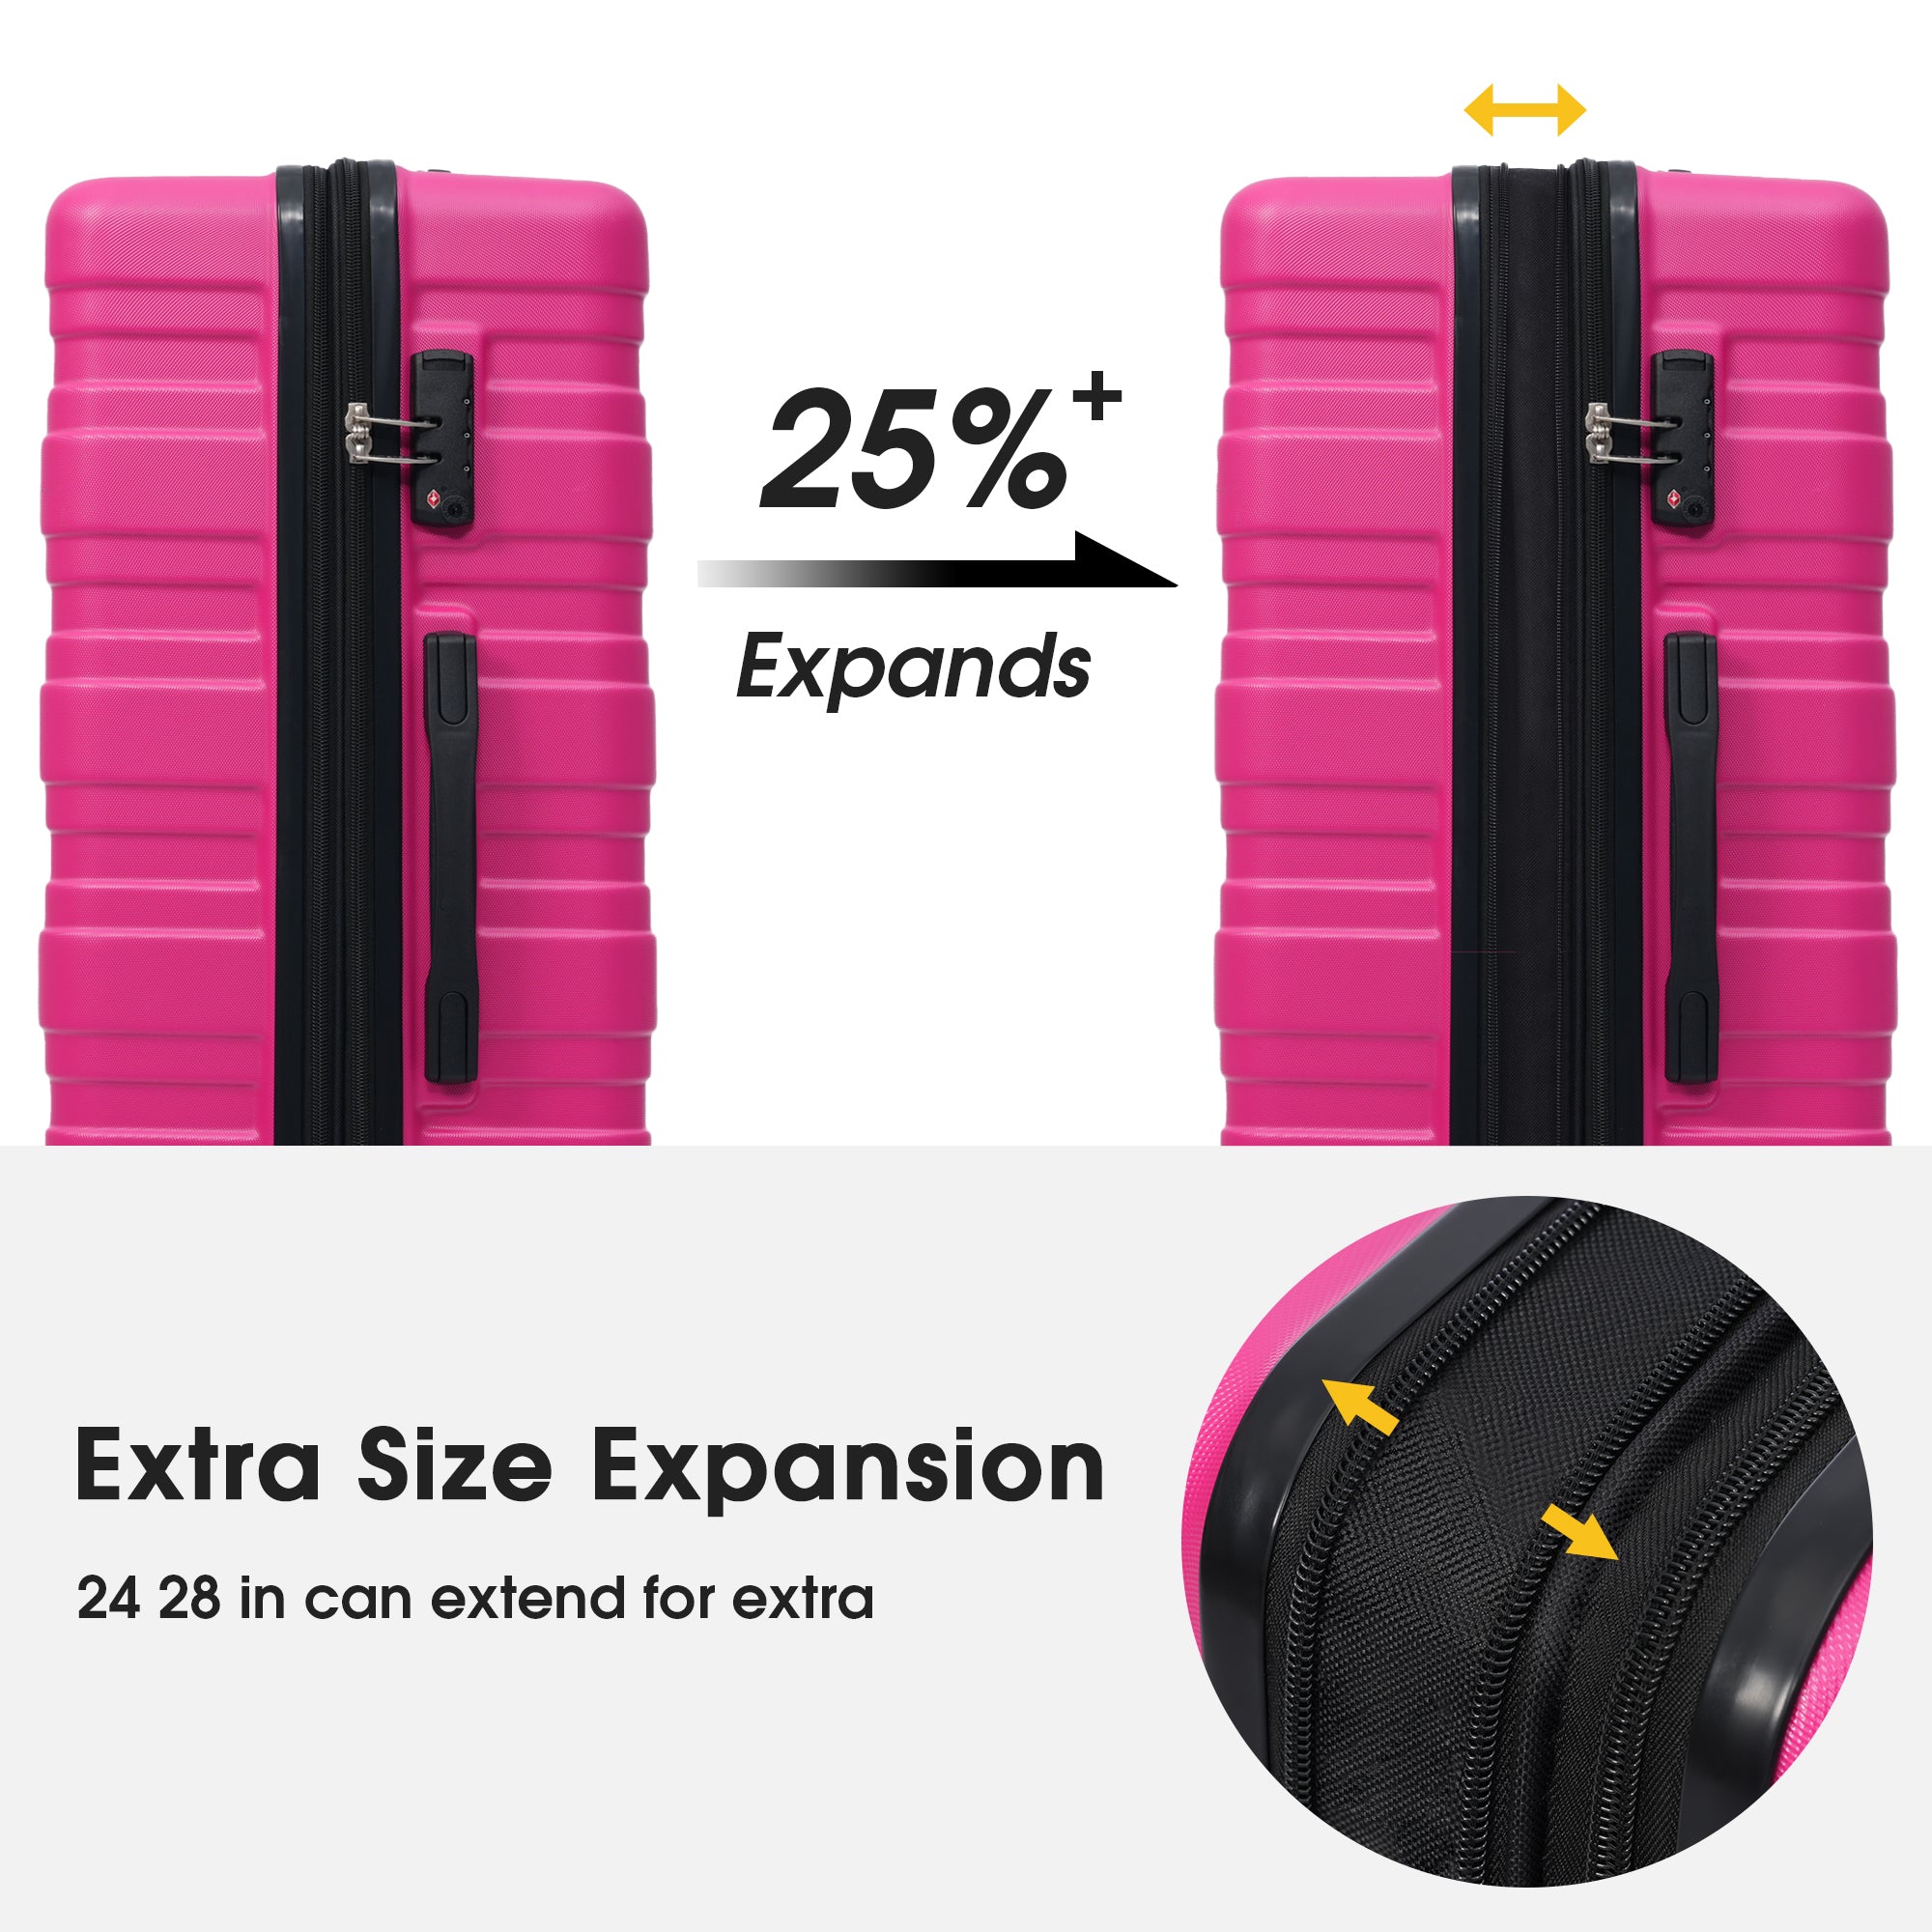 Merax Luggage with TSA Lock Spinner Wheels Hardside pink-abs